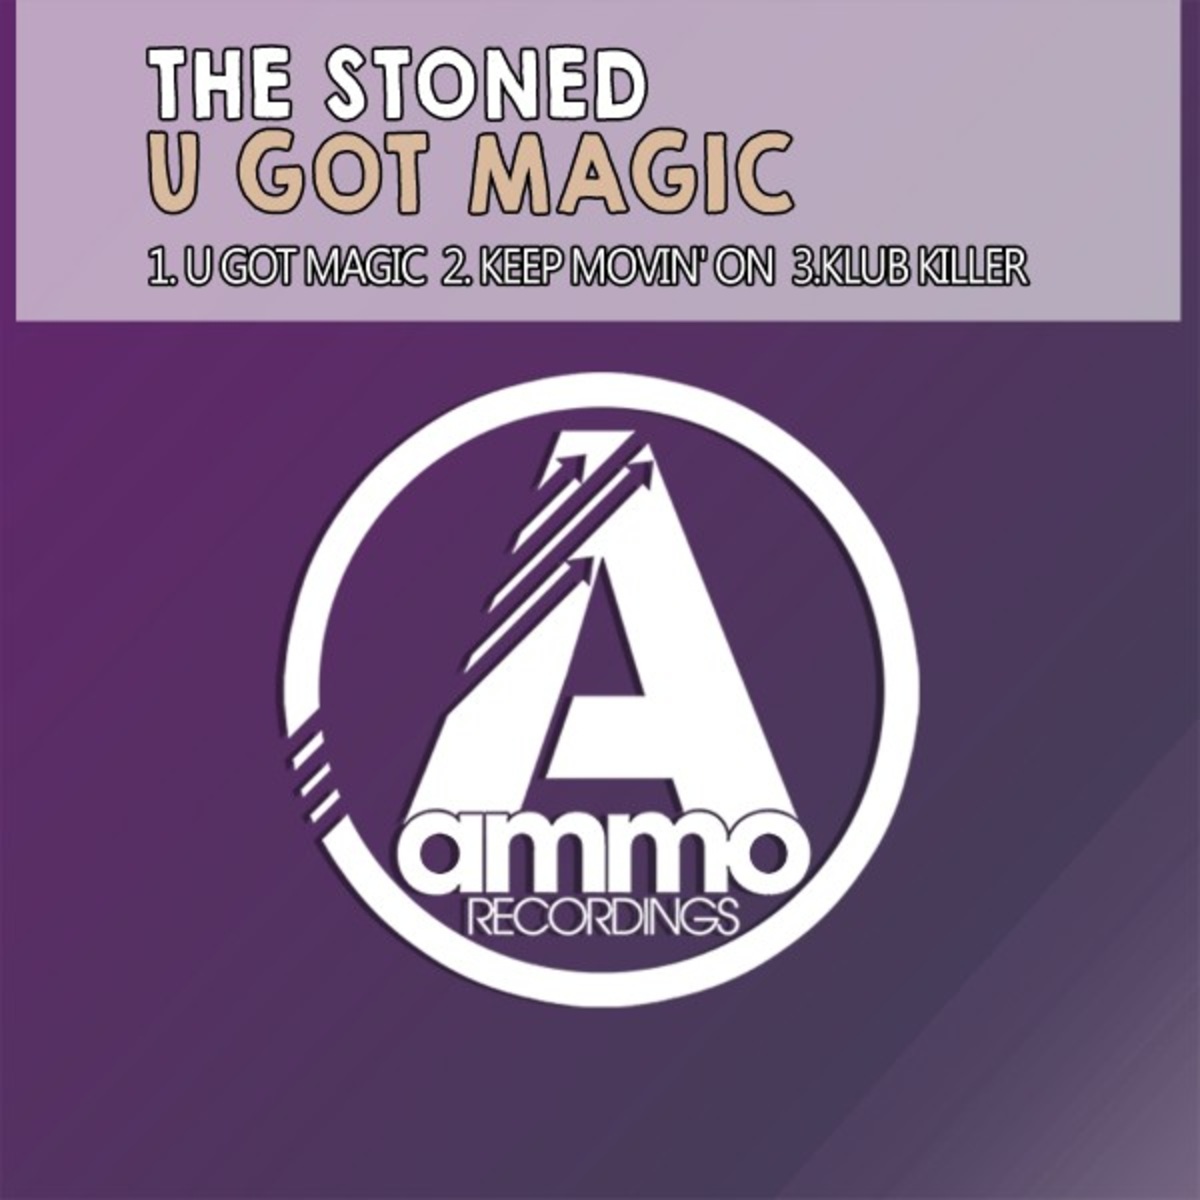 The Stoned - U Got the Magic / Ammo Recordings